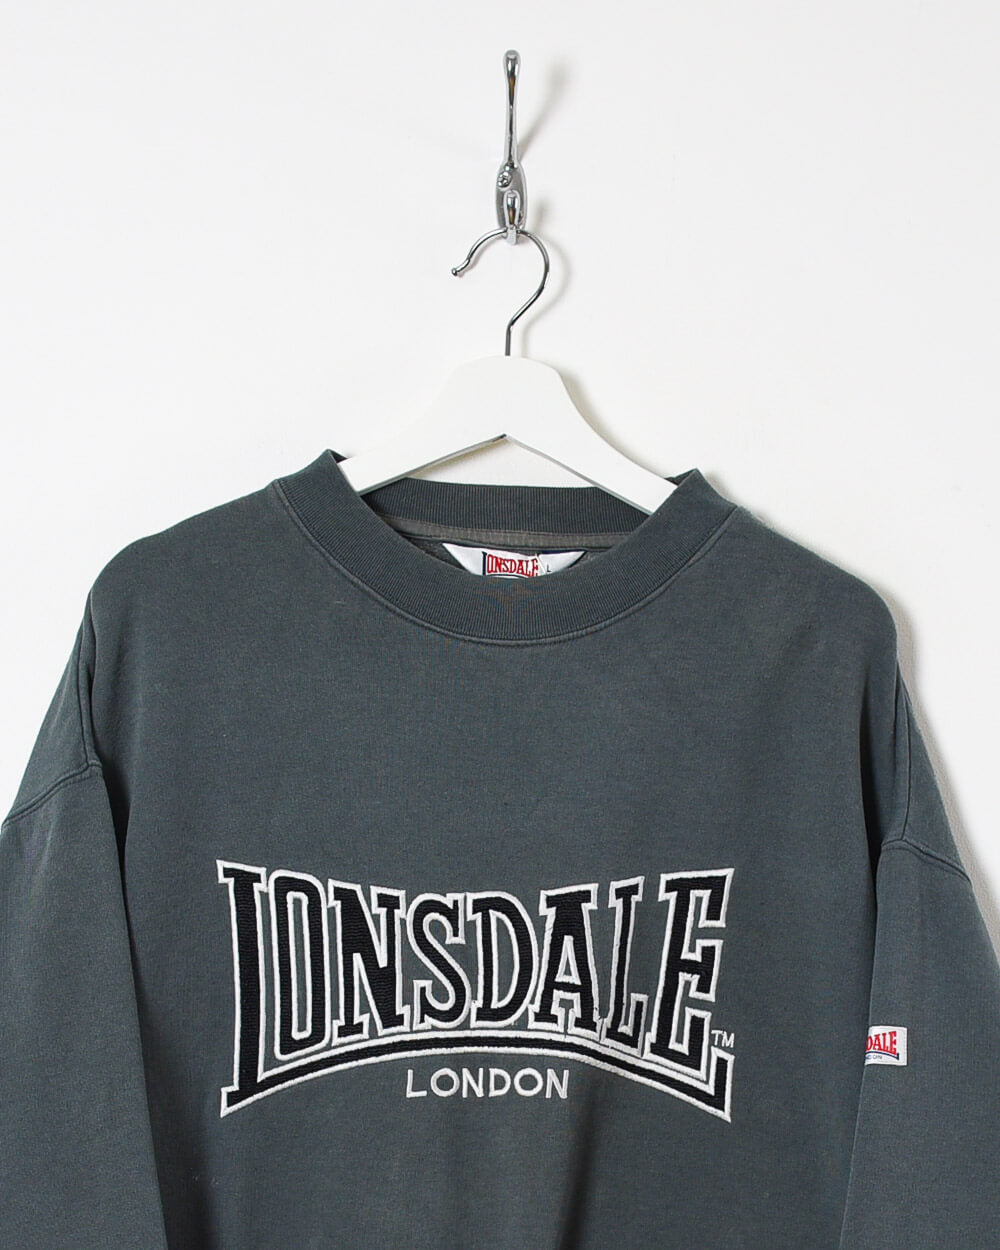 Lonsdale London Youth Sweatshirt. By Artistshot